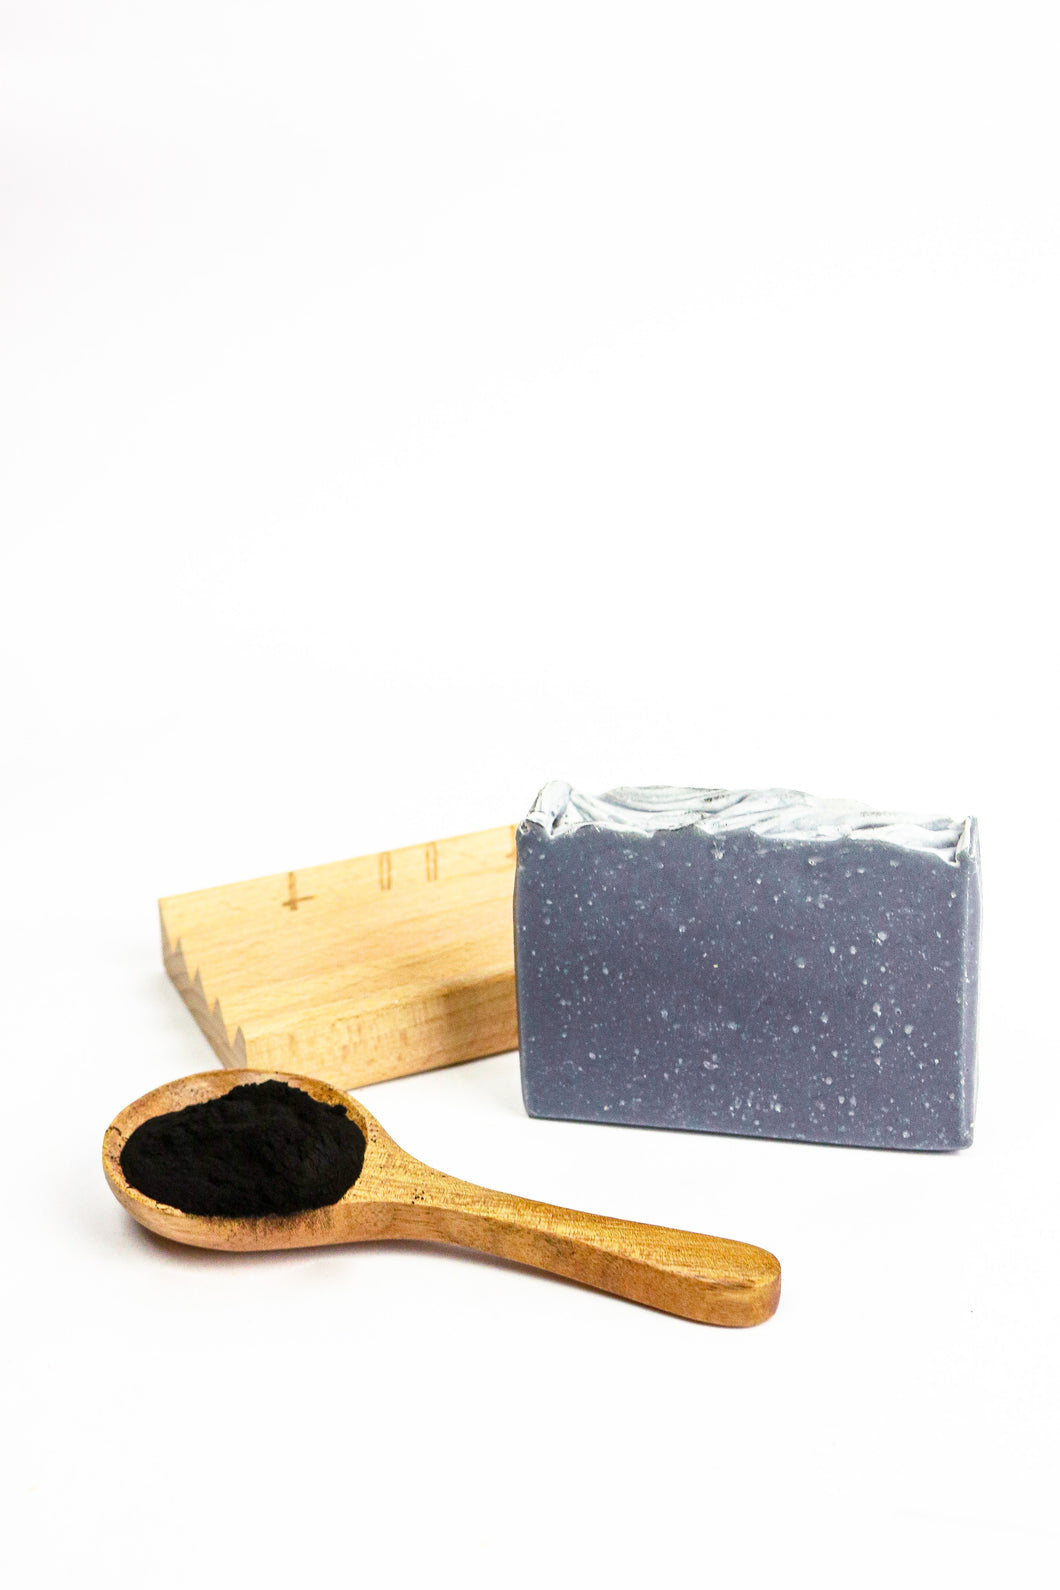 Charcoal + Peppermint Bar Soap [Subscription]